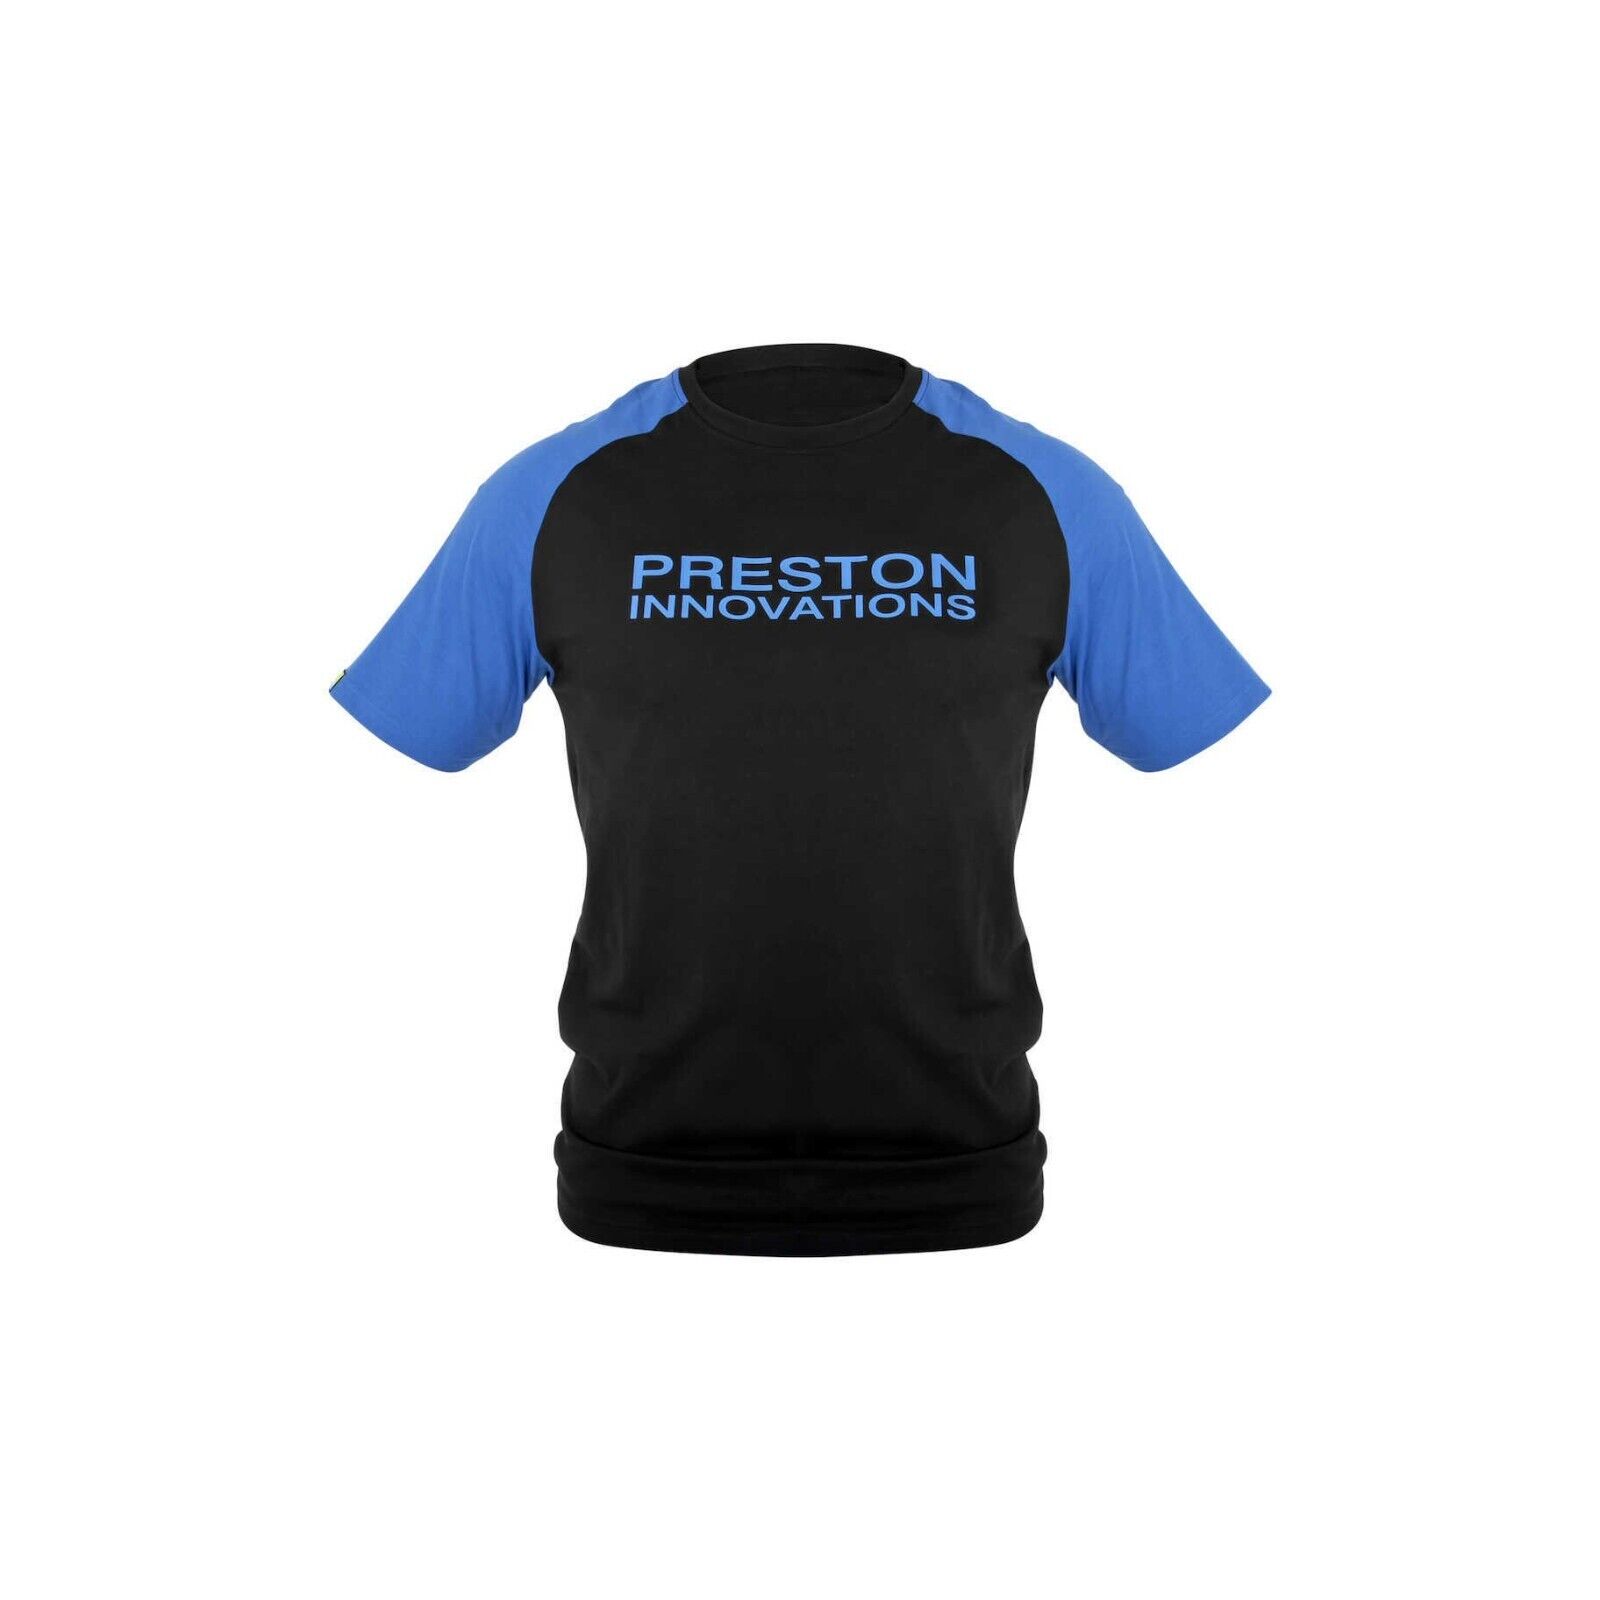 NEW Preston Innovations Shirt Light Weight RAGLAN T-shirt